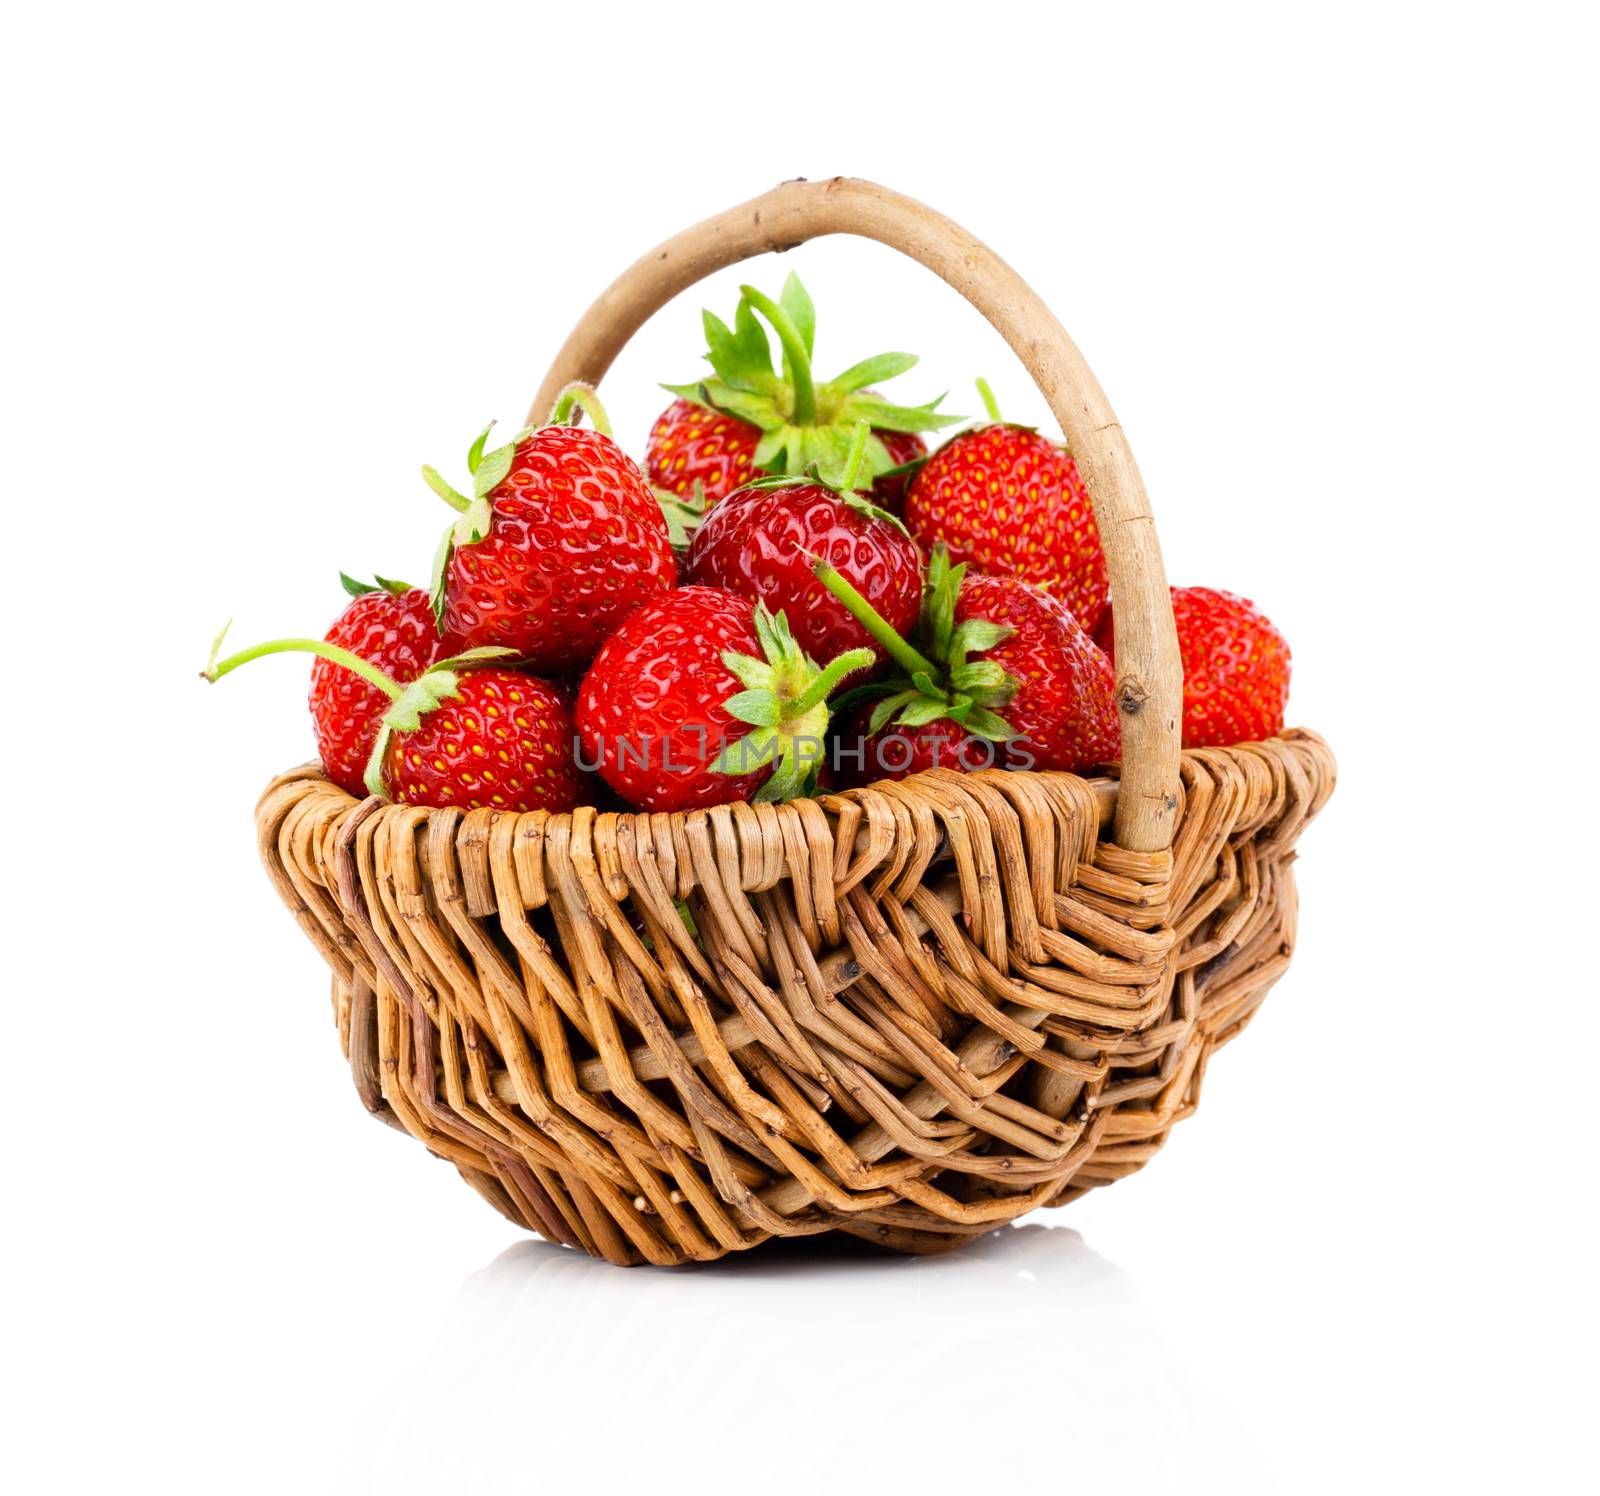 Strawberries in wicker basket, on white background by motorolka